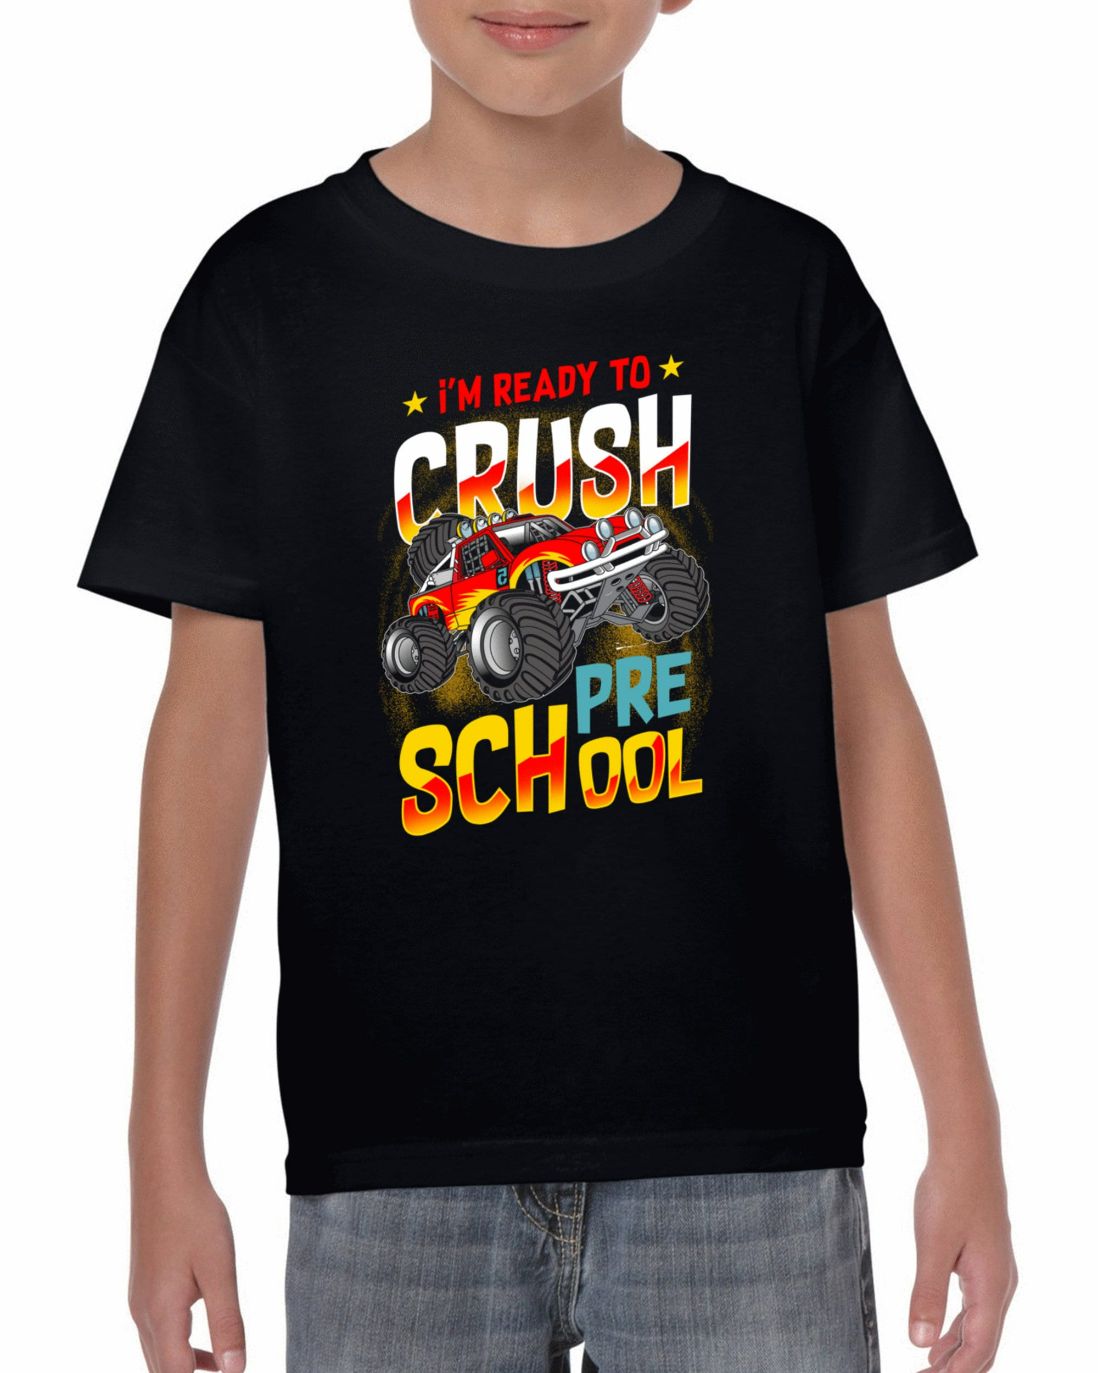 Crush Preschool Shirt